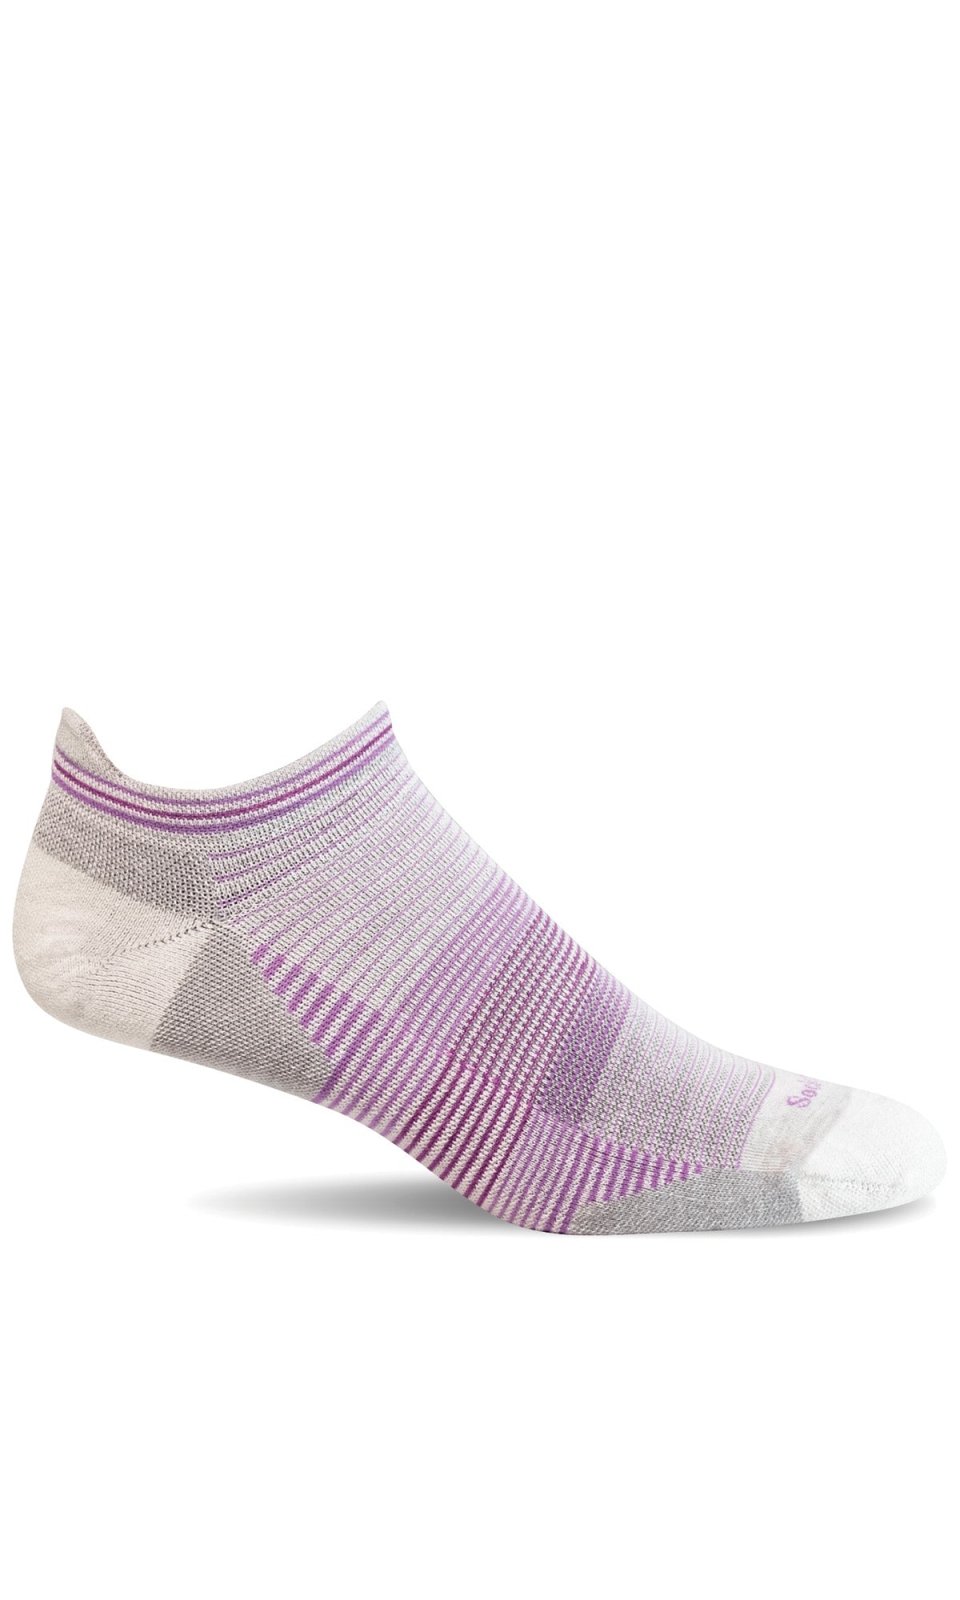 Women's Cadence Micro | Moderate Compression Socks - Merino Wool Sport Compression - Sockwell